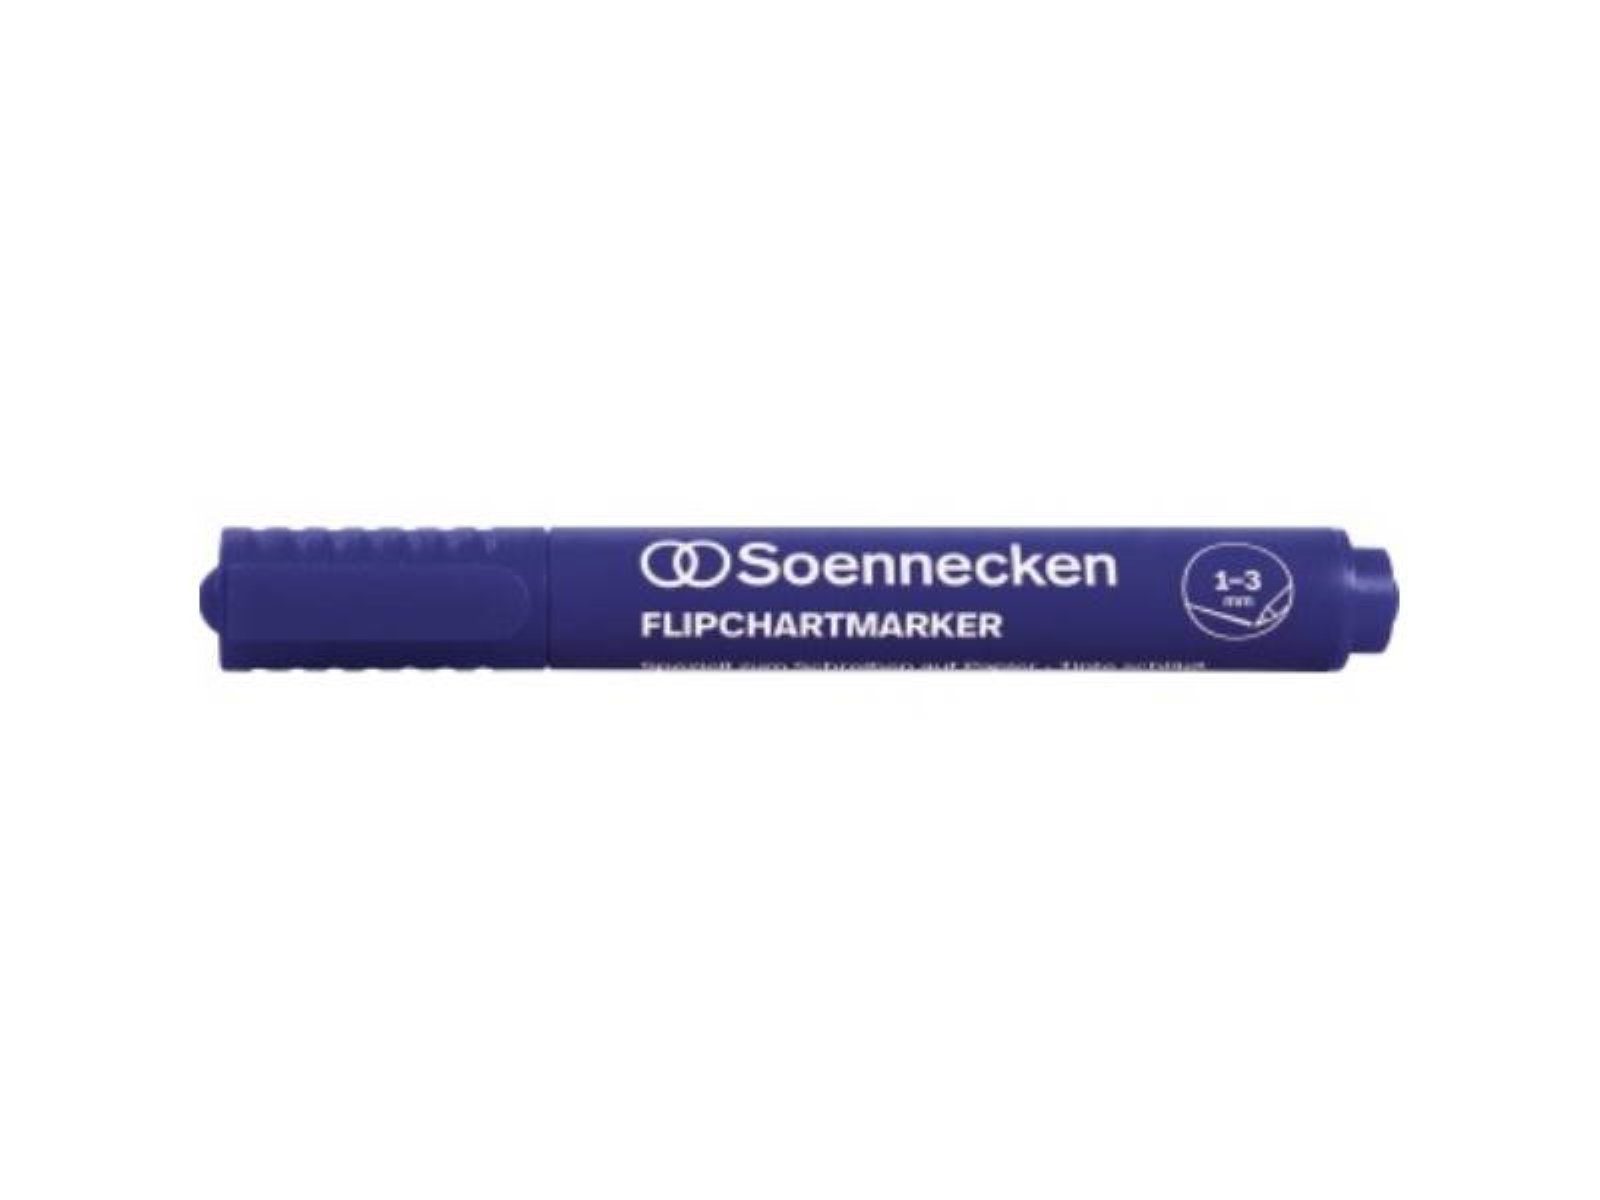 Soennecken Marker SOENNECKEN Fl blau Soennecken Soennecken 3076 Flipchartmarker 1-3mm